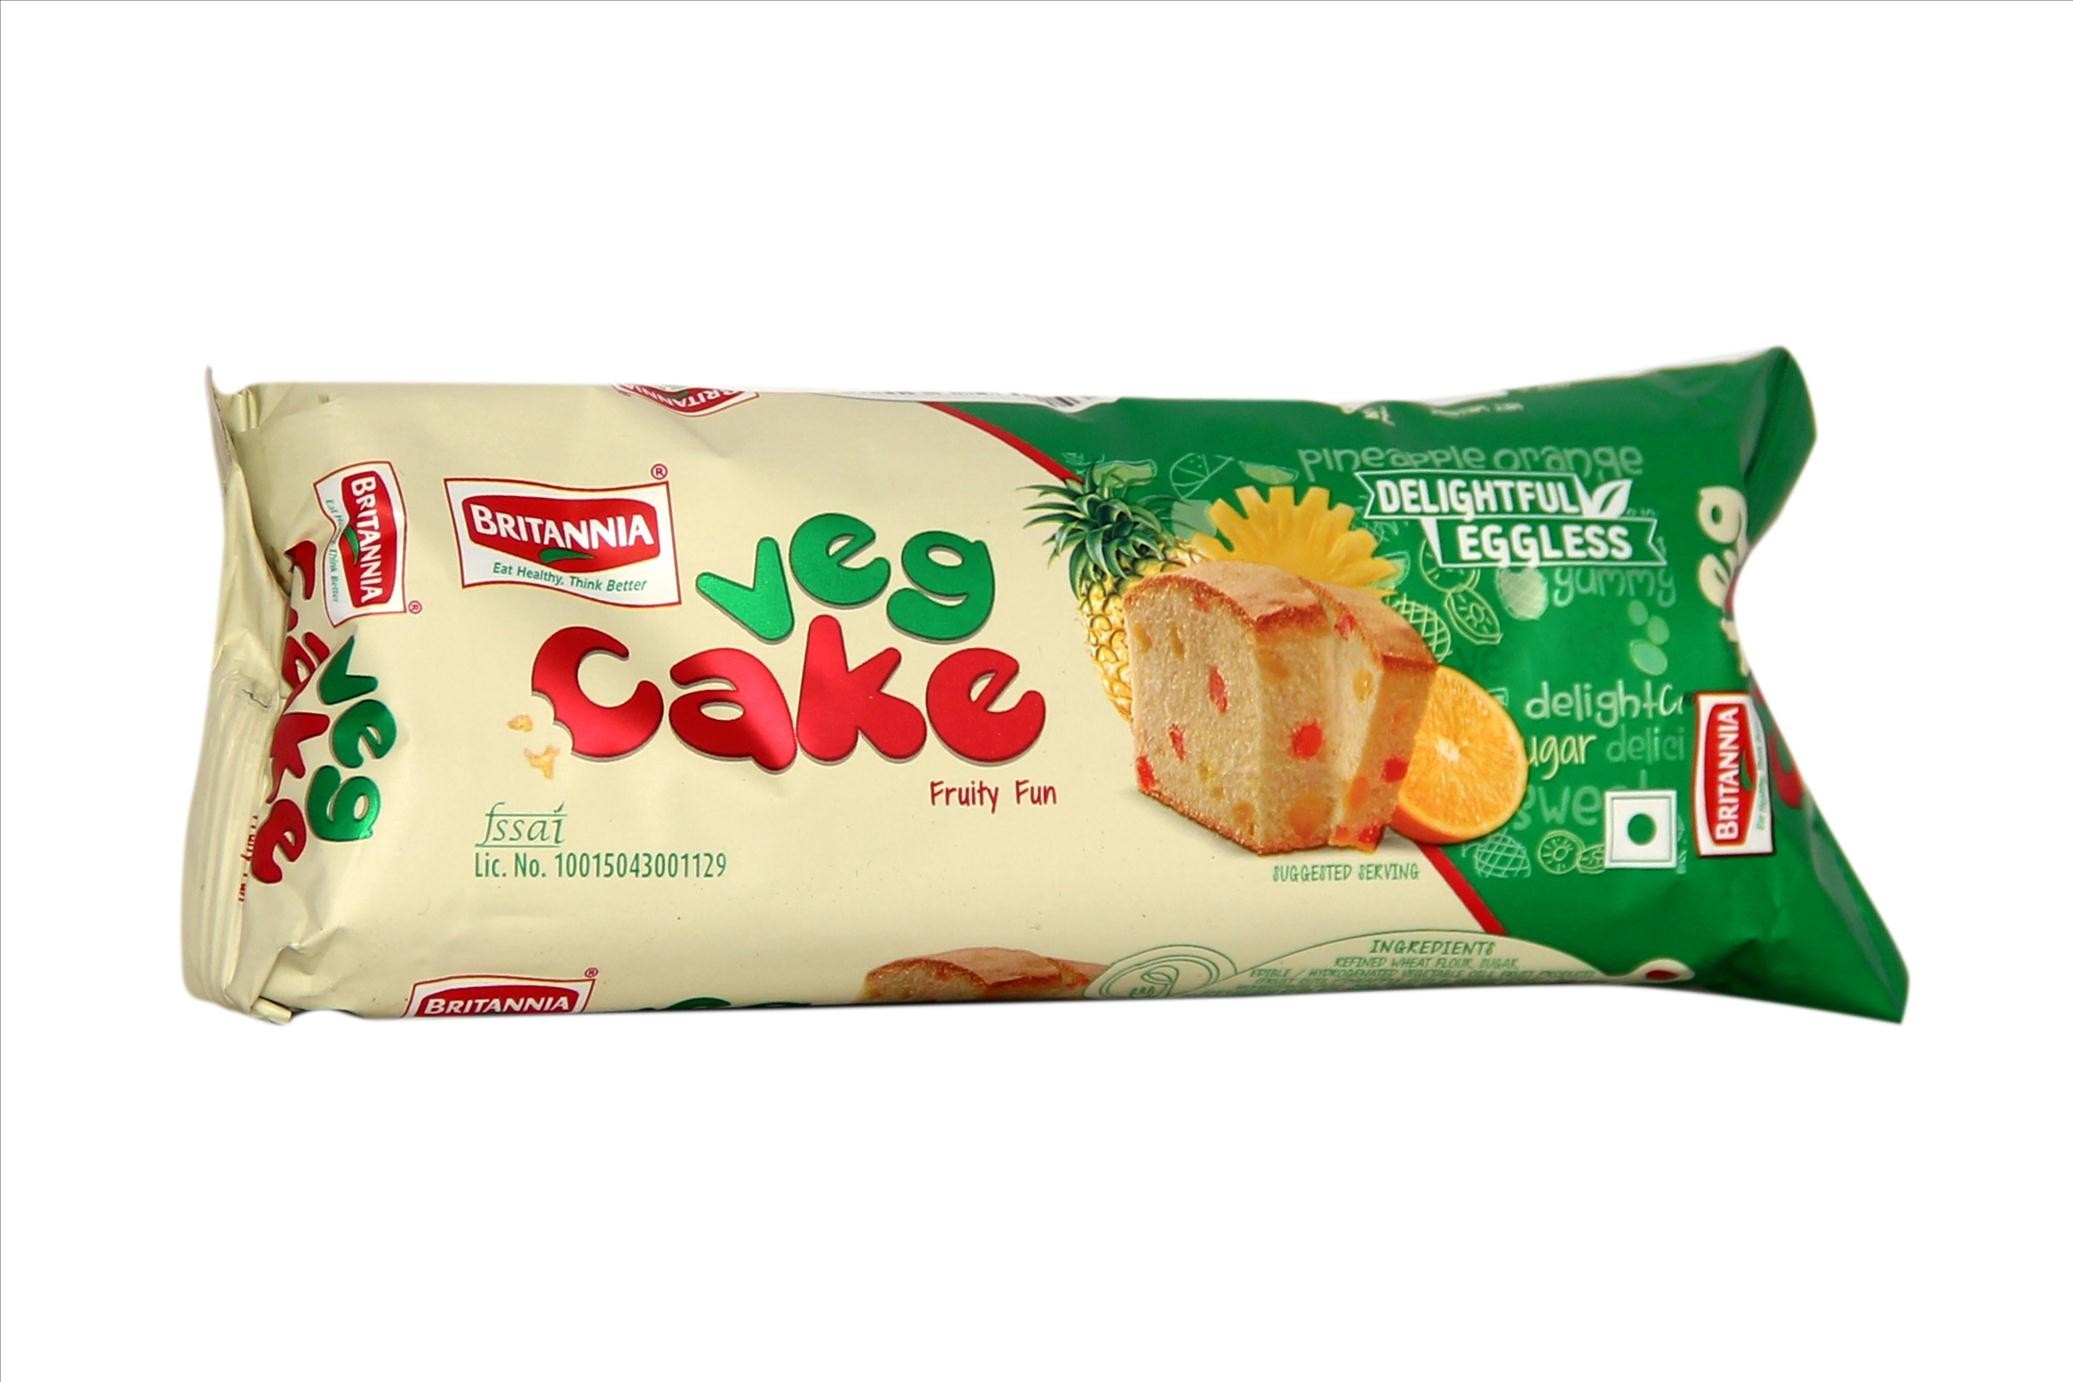 Britannia Cake Veg - Fruity Fun - Pack of Rs.20